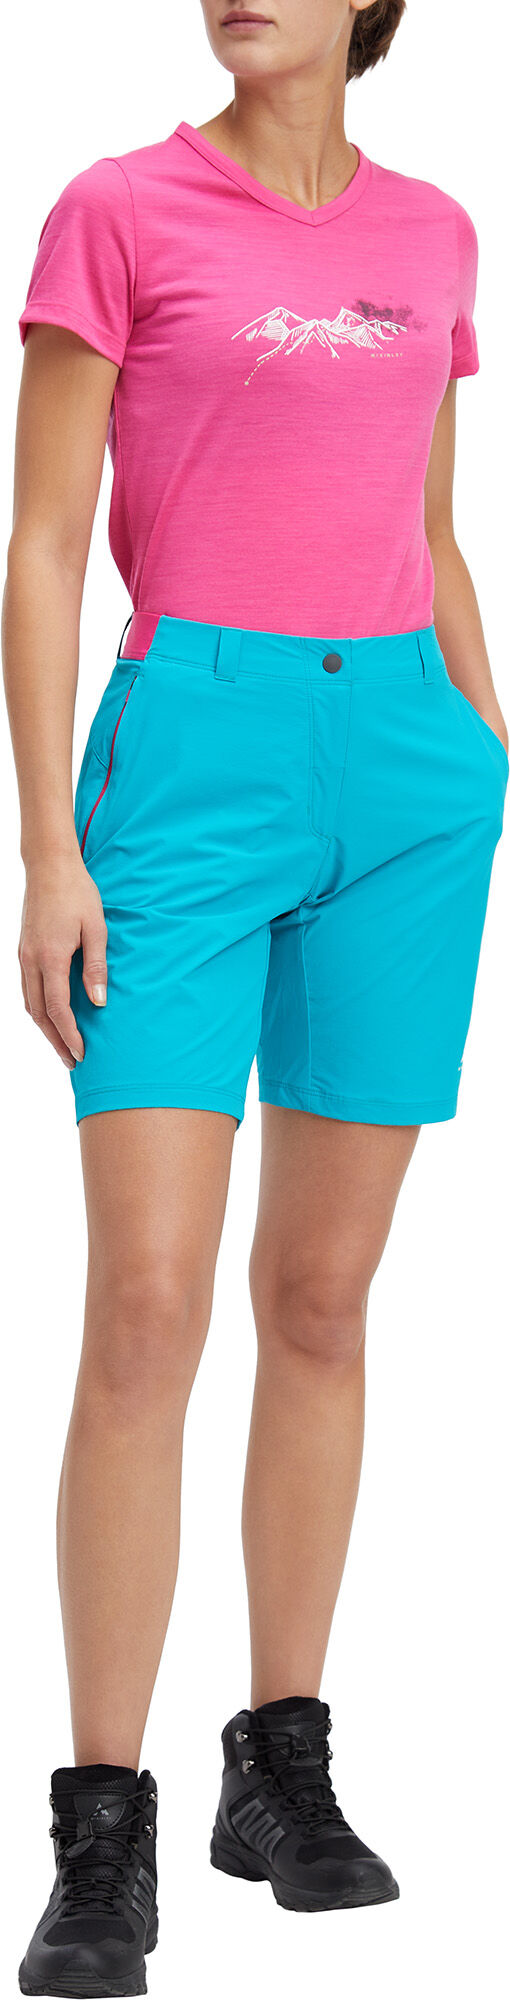 Shorts dark | Kinley blue - aqua/pink 38 Gardena Mc - Brenton W Mountain Mc Sports Kinley